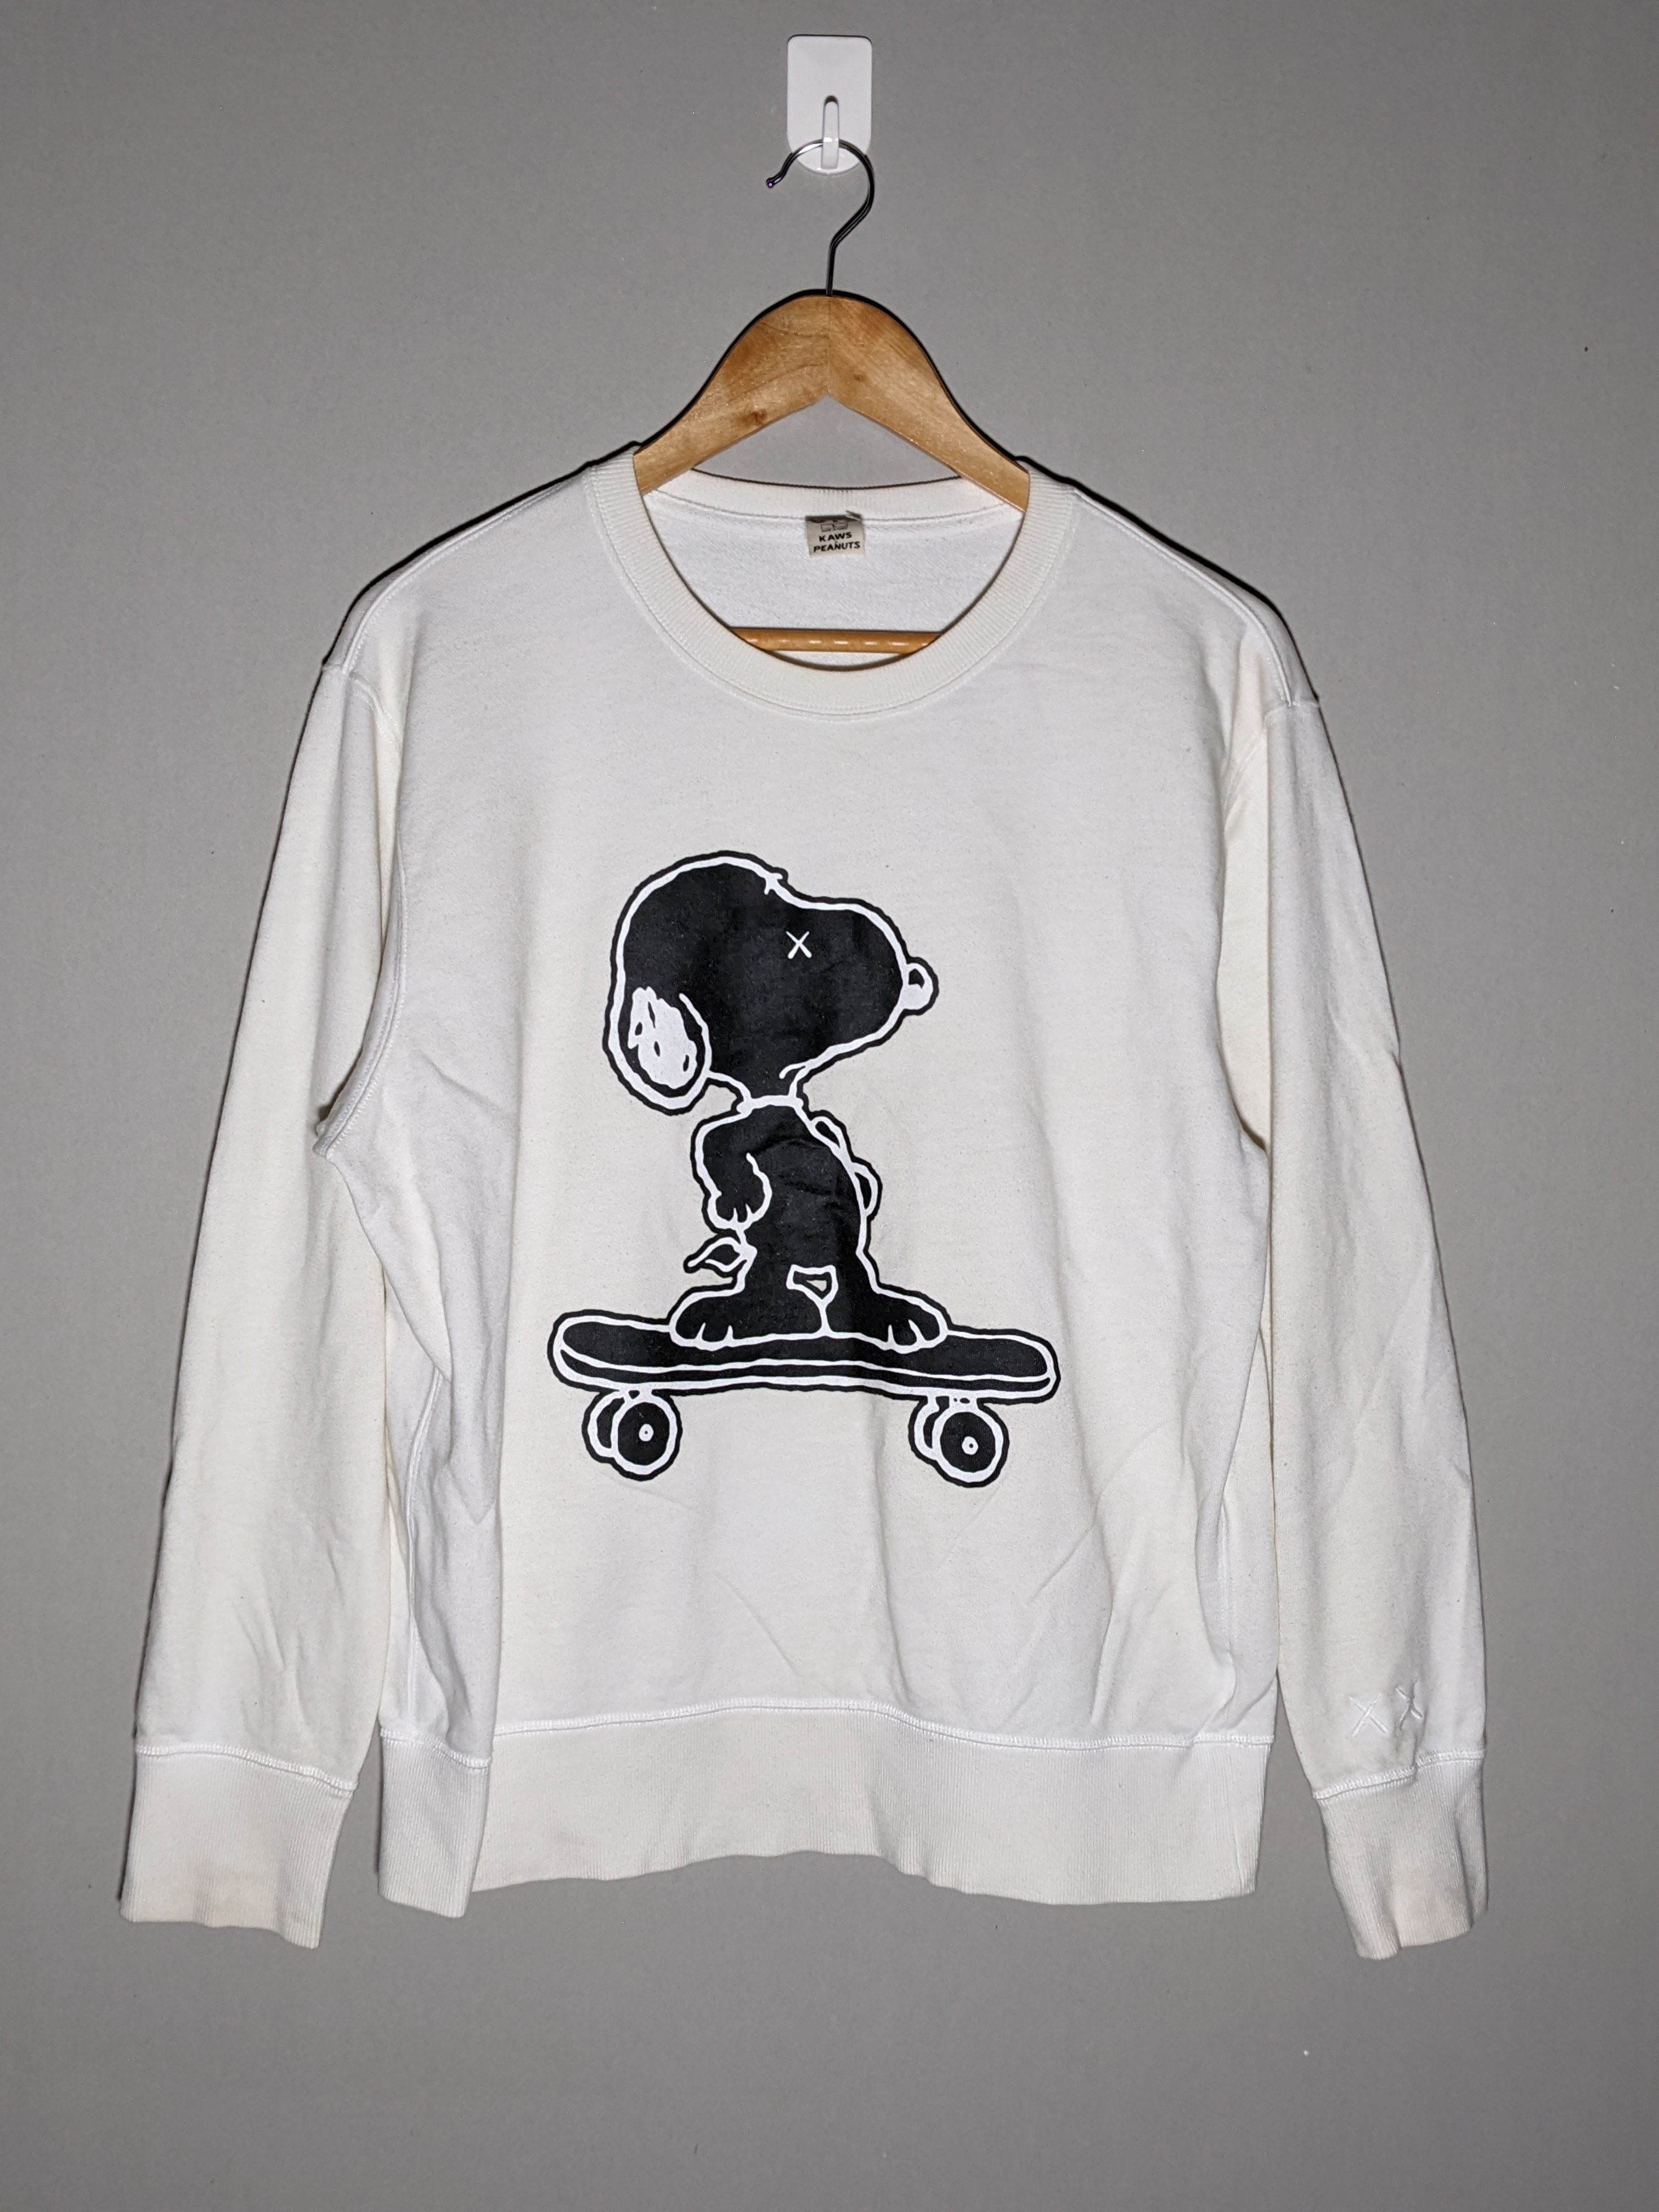 Uniqlo Kaws Snoopy Peanuts White Sweatshirt - 1